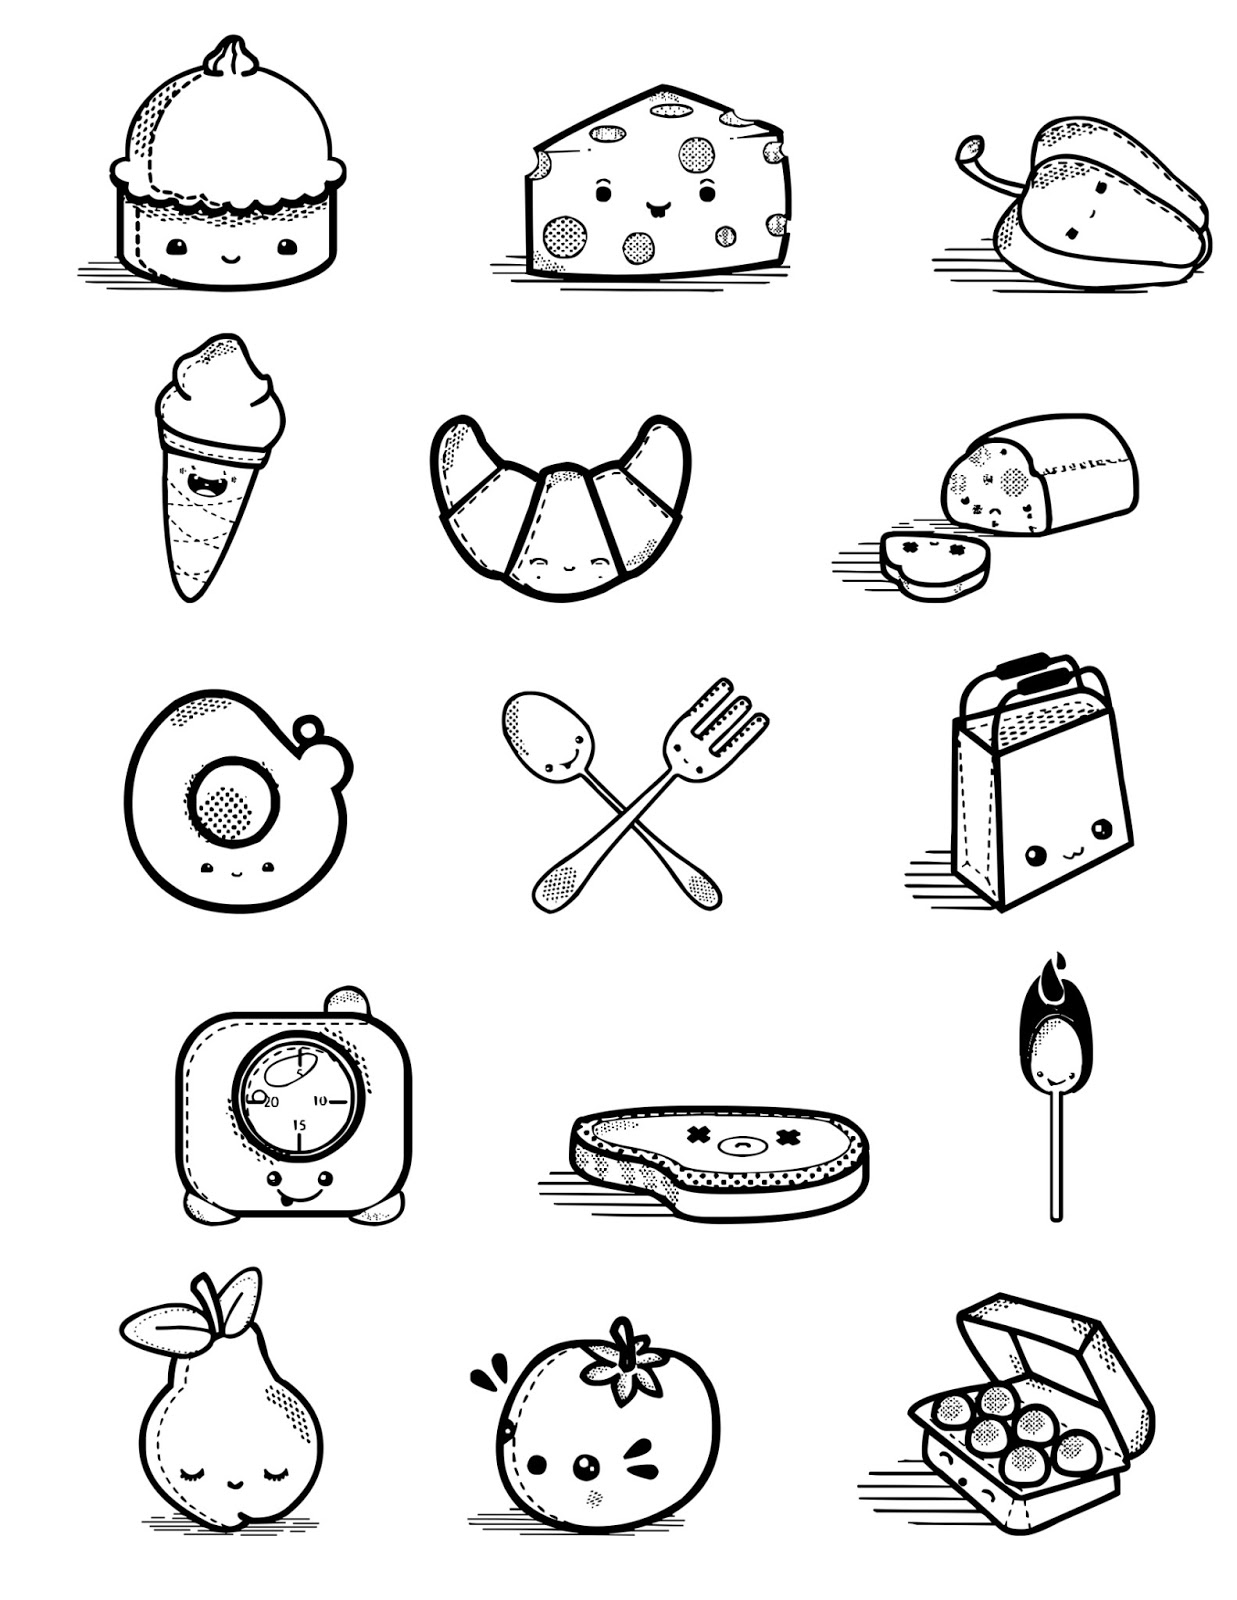 Еда карандашом легко. Раскраски маленькие еда. Рисунки для срисовки еда. Рисунки для срисовки легко еда. Рисунок еда для срисовки легкий.